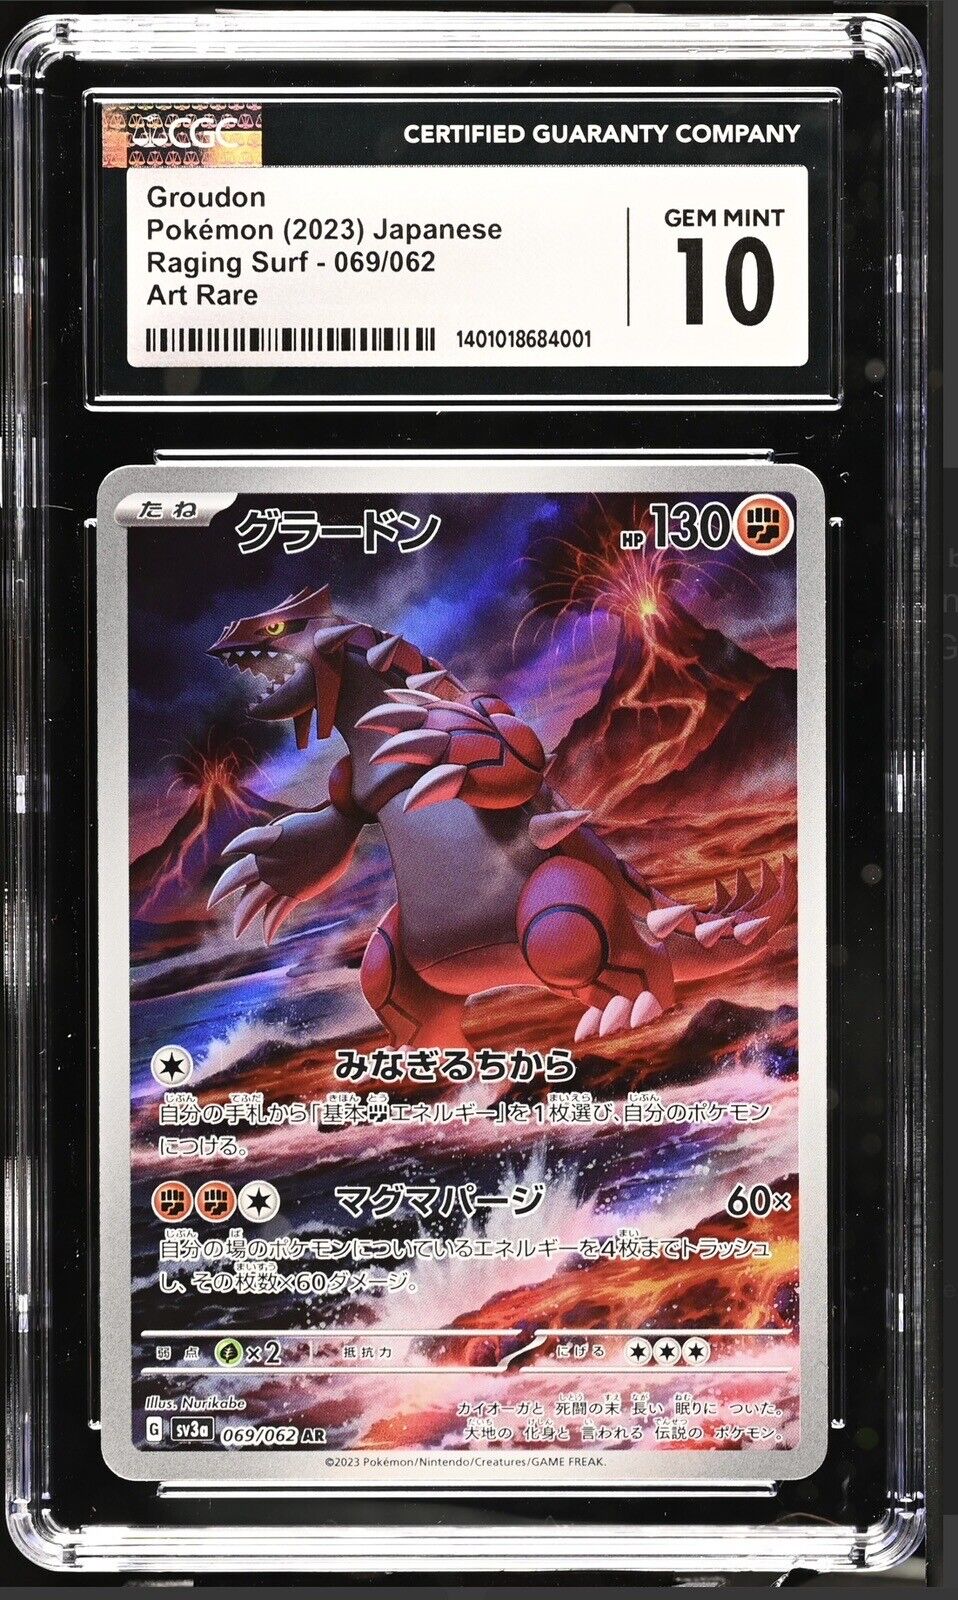 CGC 10 Groudon 069/062 AR Raging Surf SV3a Japanese Pokemon Card